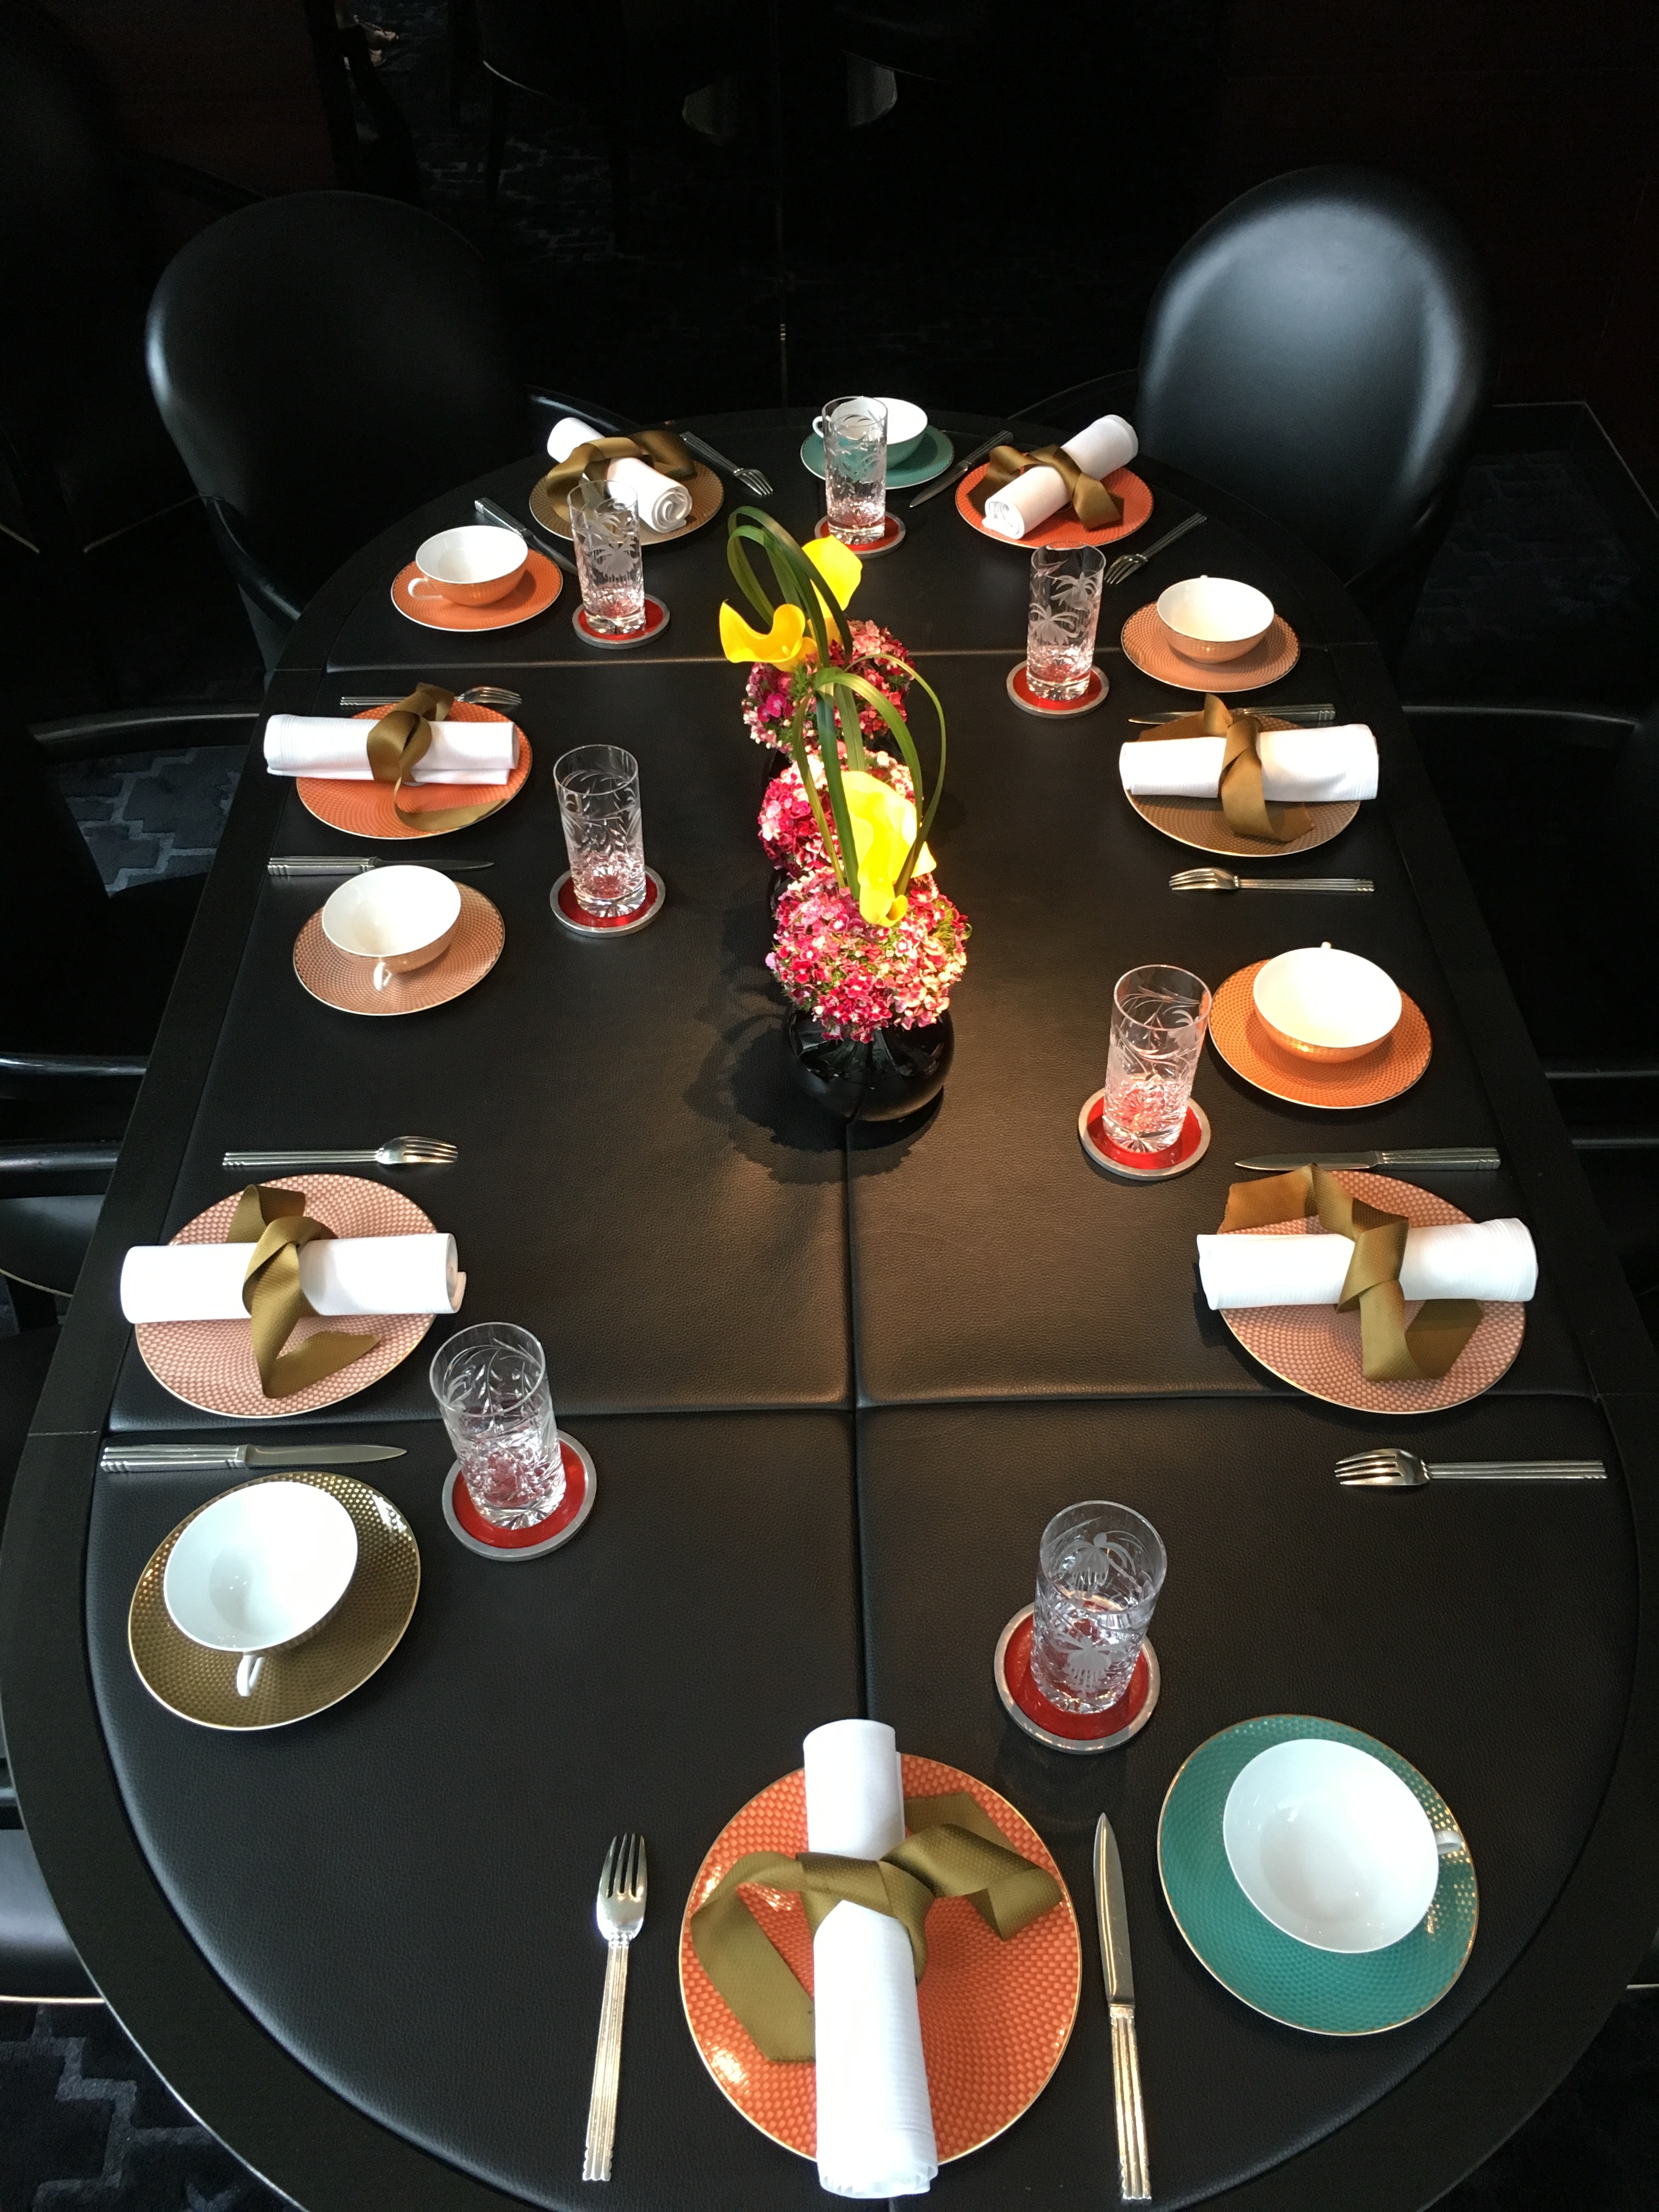 Raynaud Chambord Black American Dinner Plate